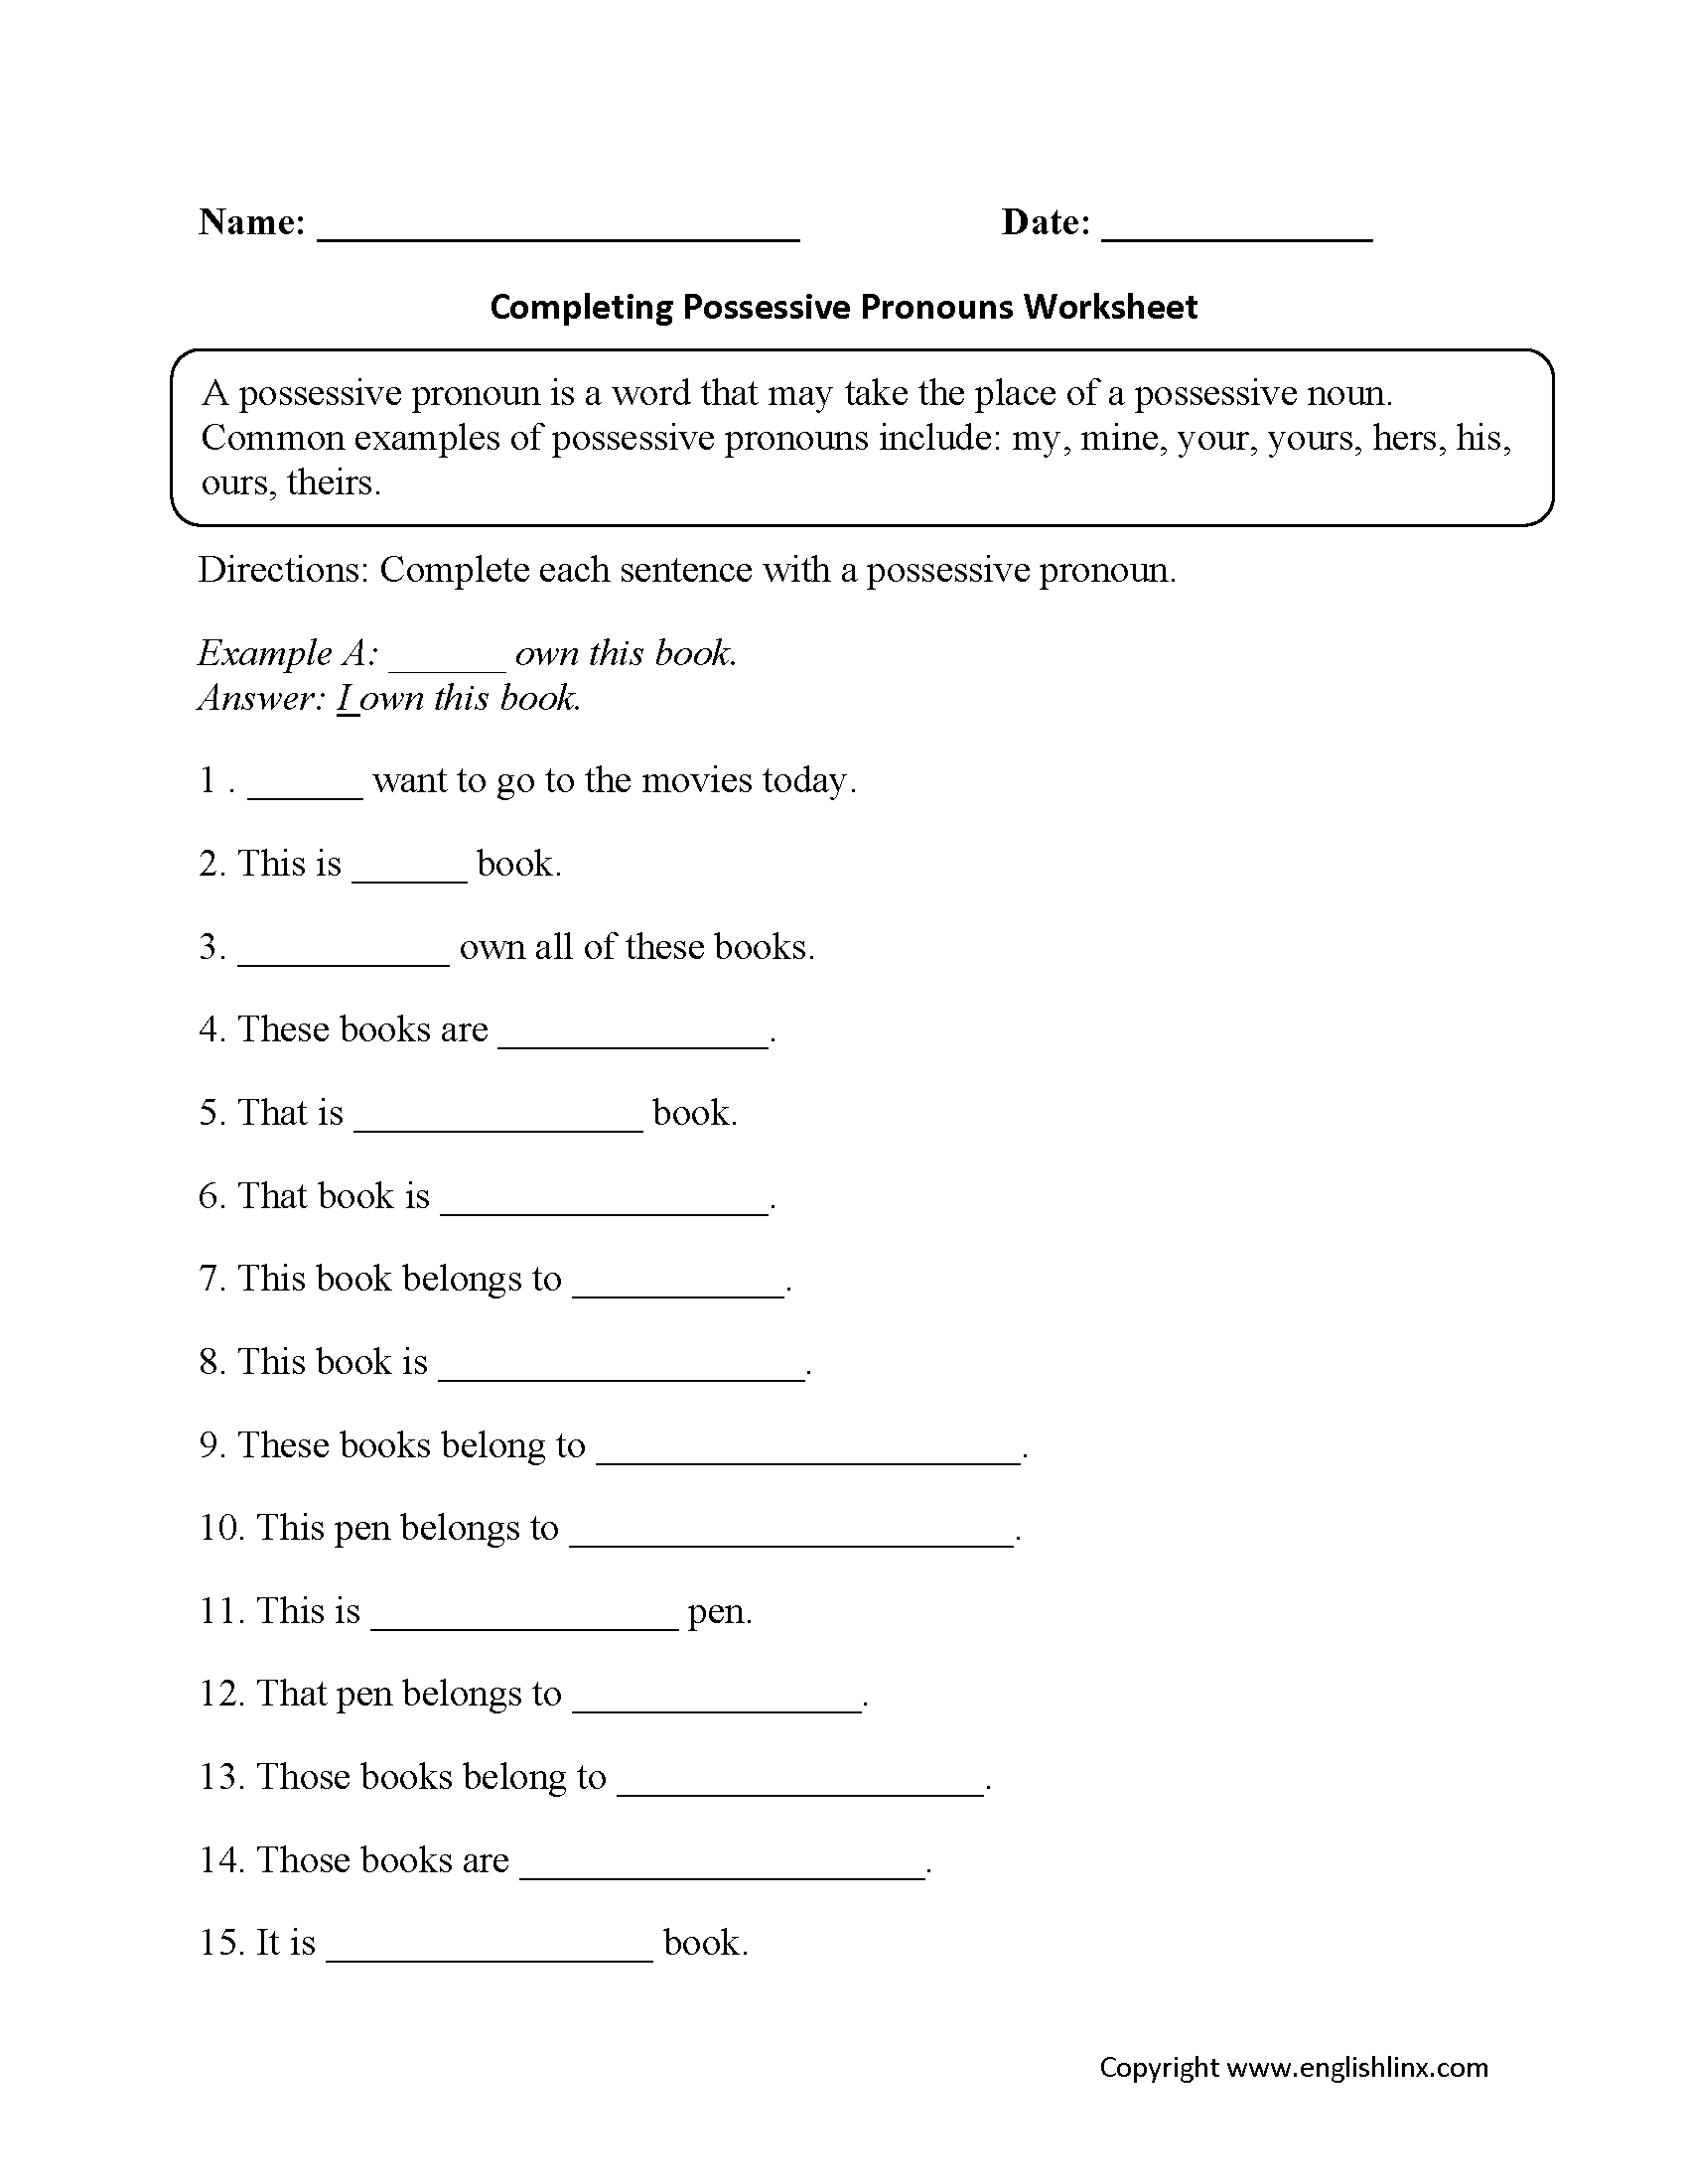 Completing Possessive Pronouns Worksheet